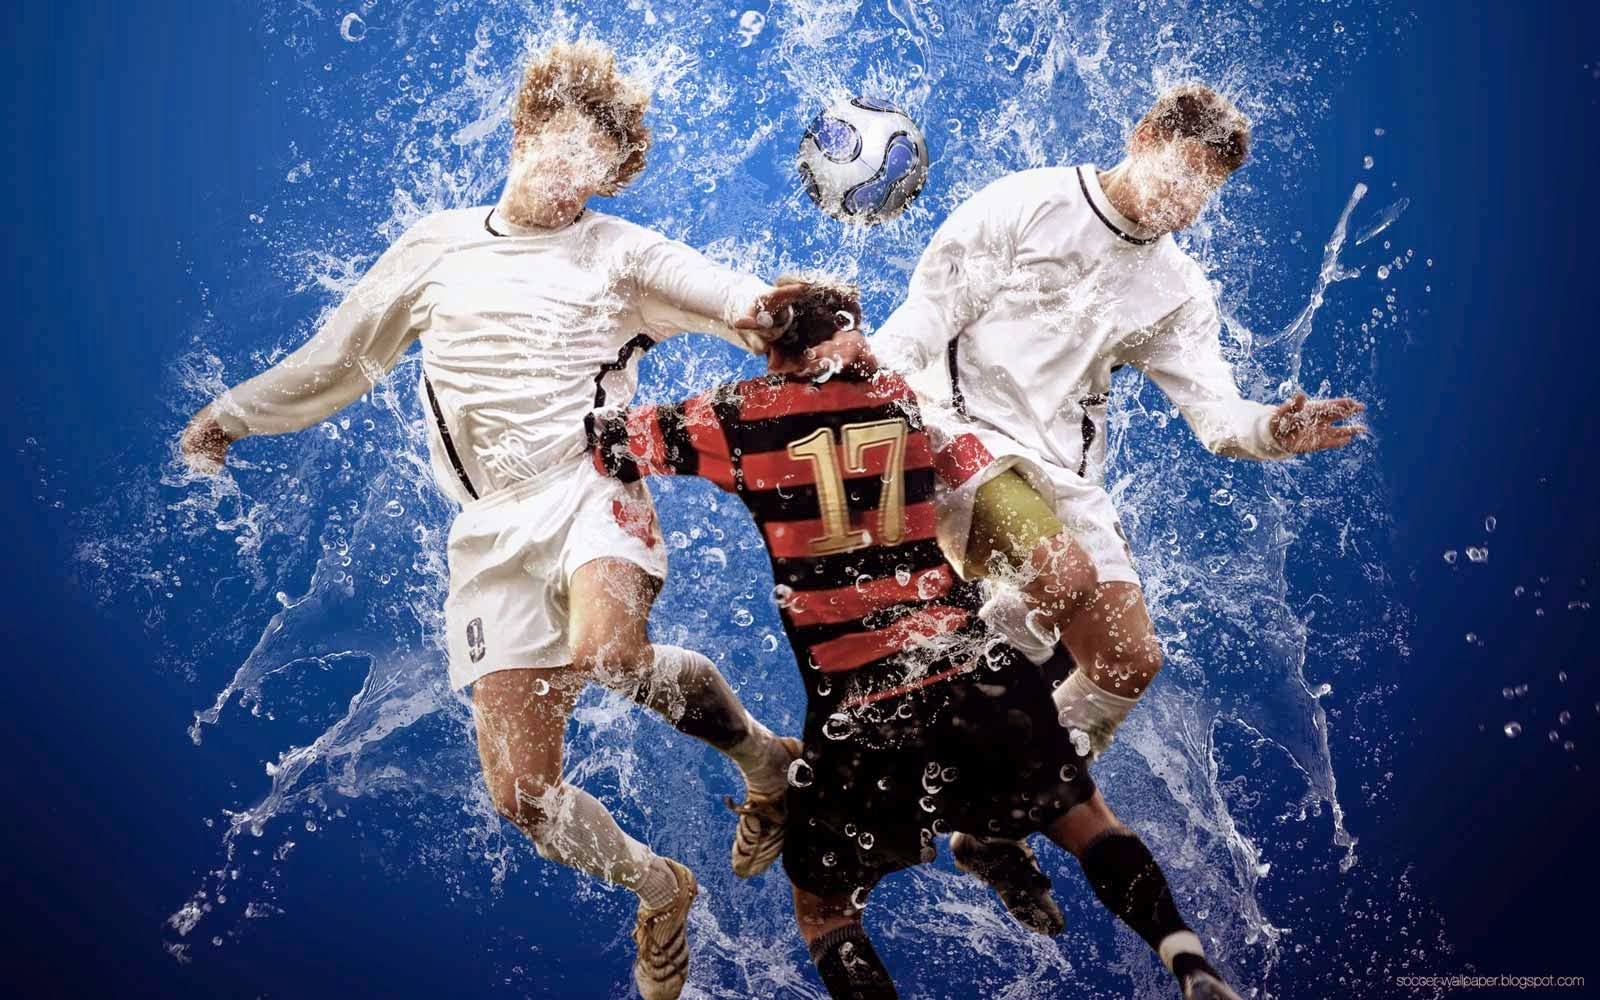 Soccer Wallpaper: Top 30 Soccer Wallpapers